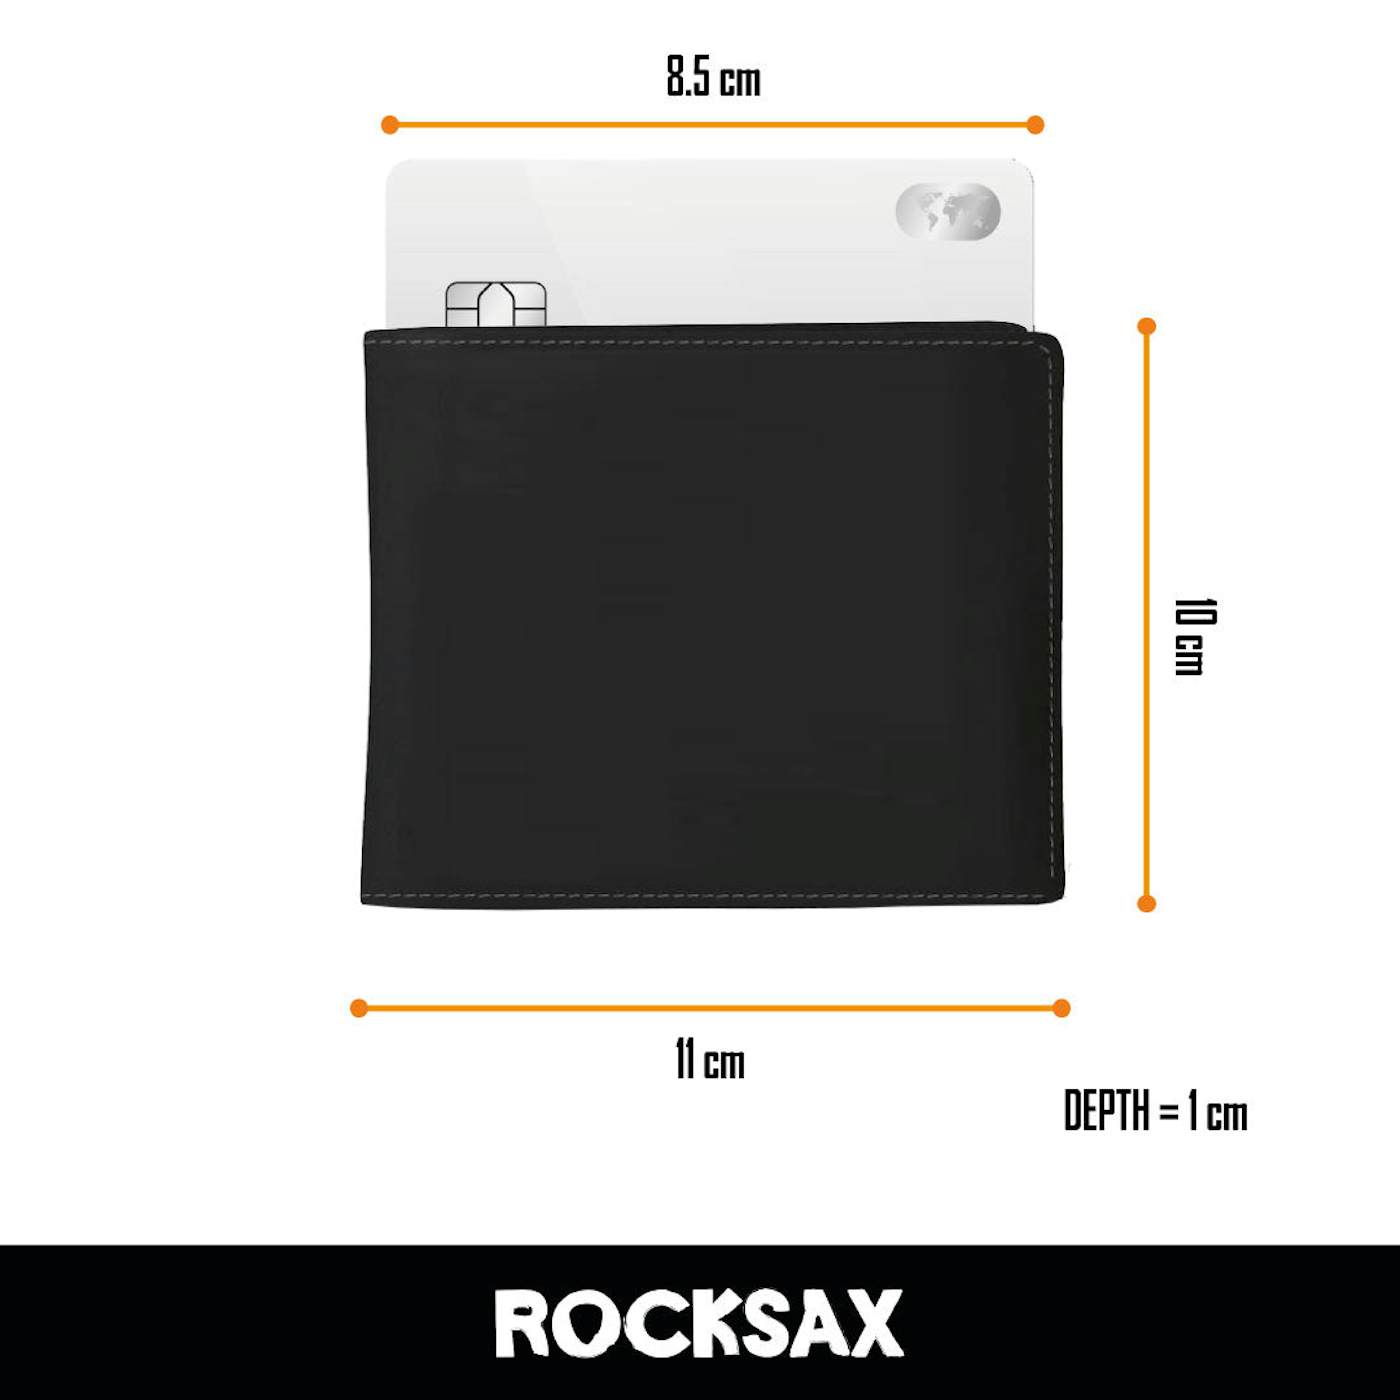 Rocksax Black Sabbath Bum Bag (Fanny pack) - NSD Repeated